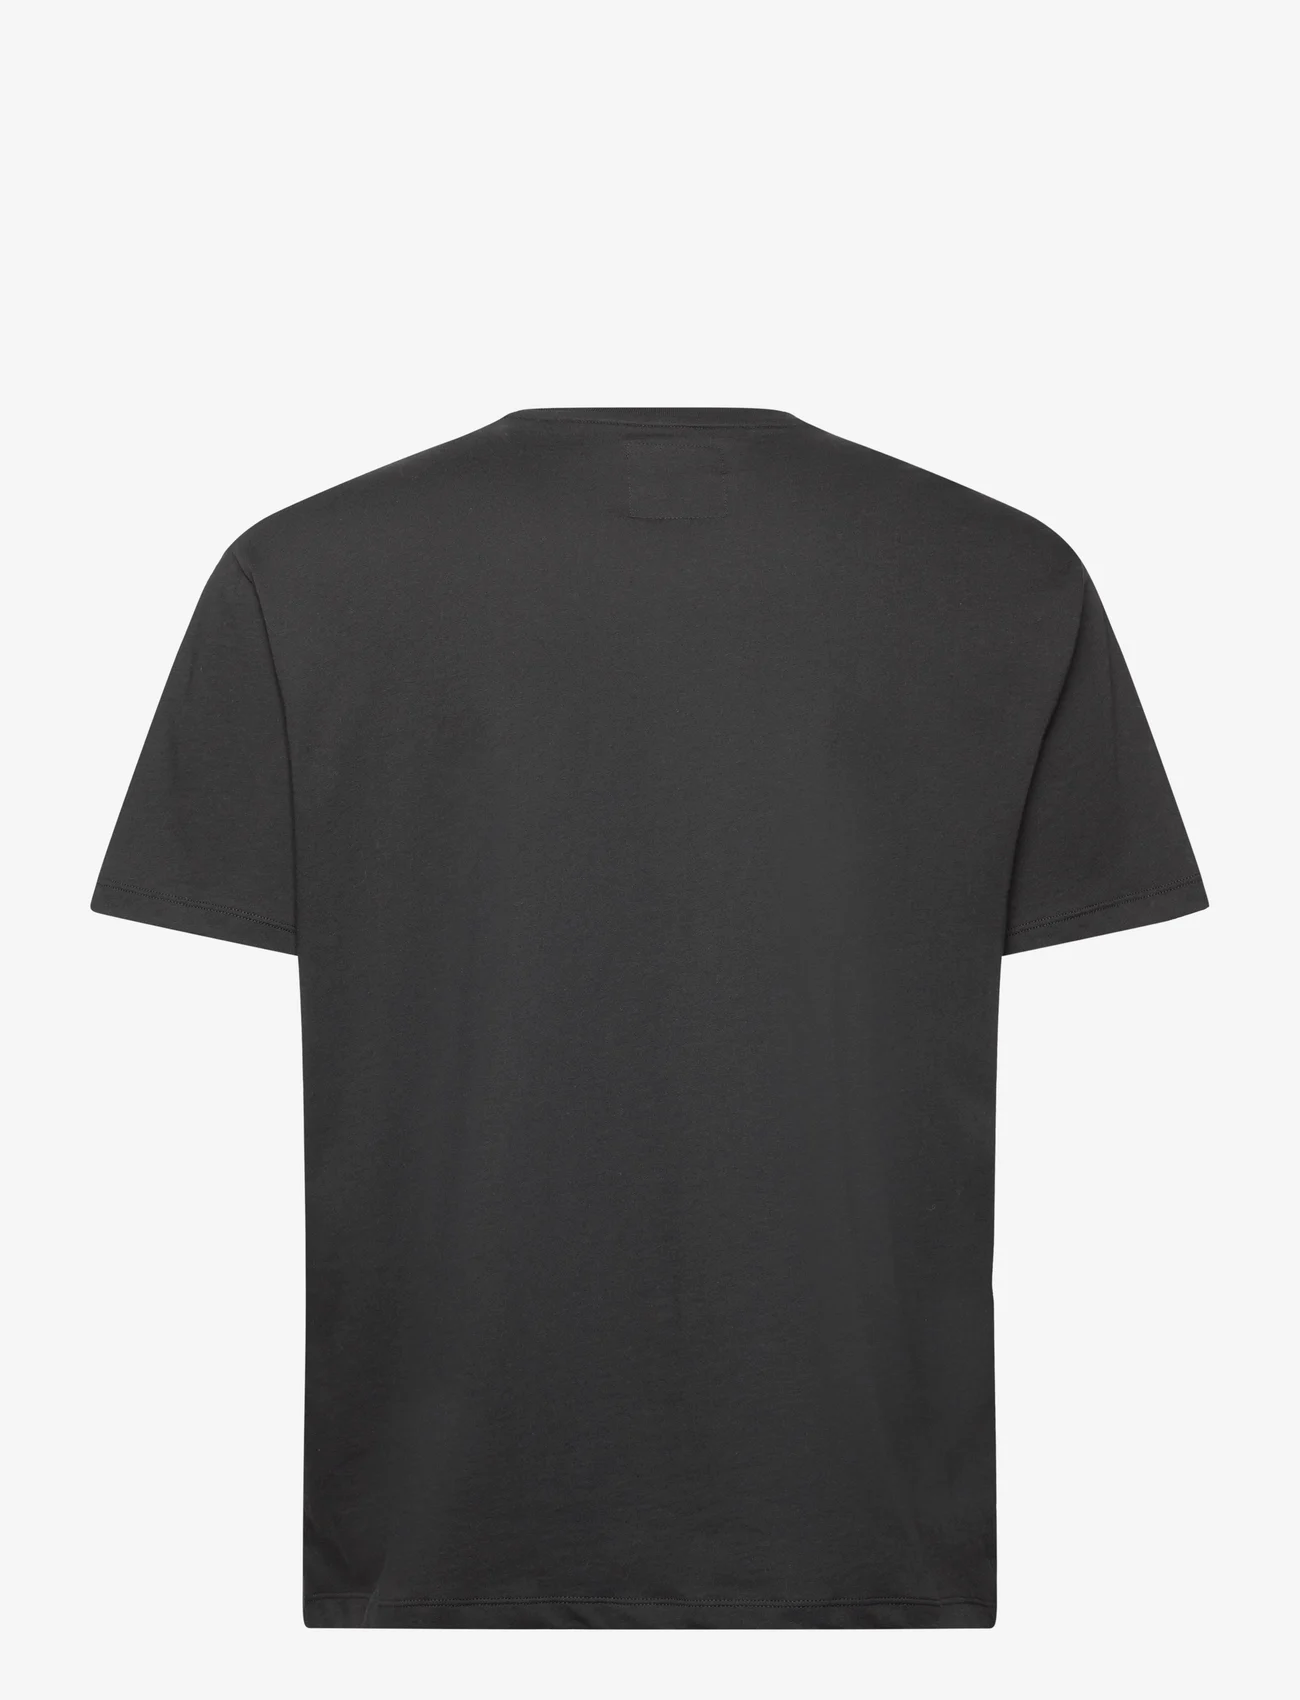 Armani Exchange - T-SHIRT - short-sleeved t-shirts - 1200-black - 1